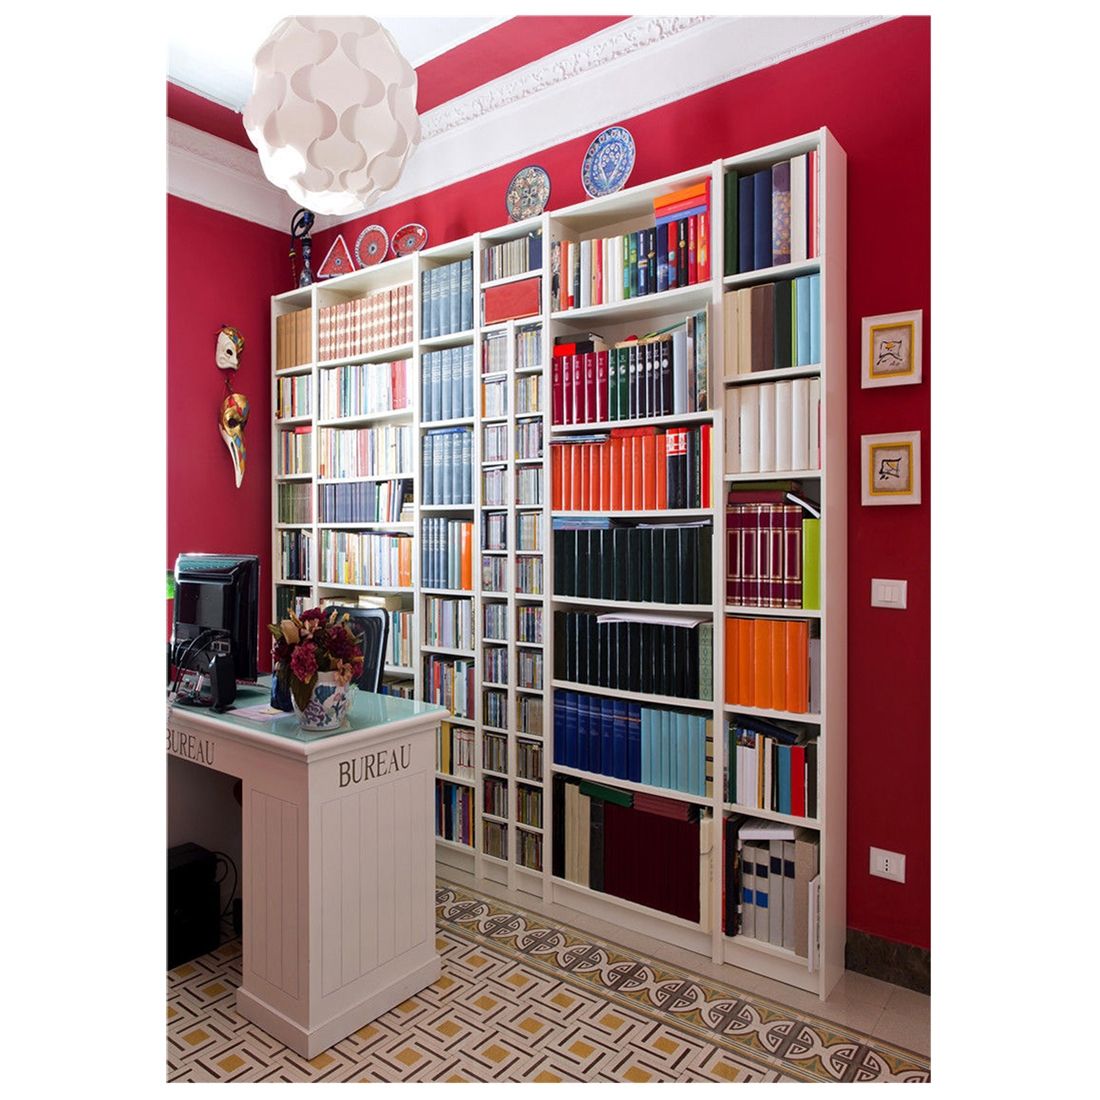 High Quality Bookshelves Photos Promotion Shop For High Quality For High Quality Bookshelves (View 7 of 15)